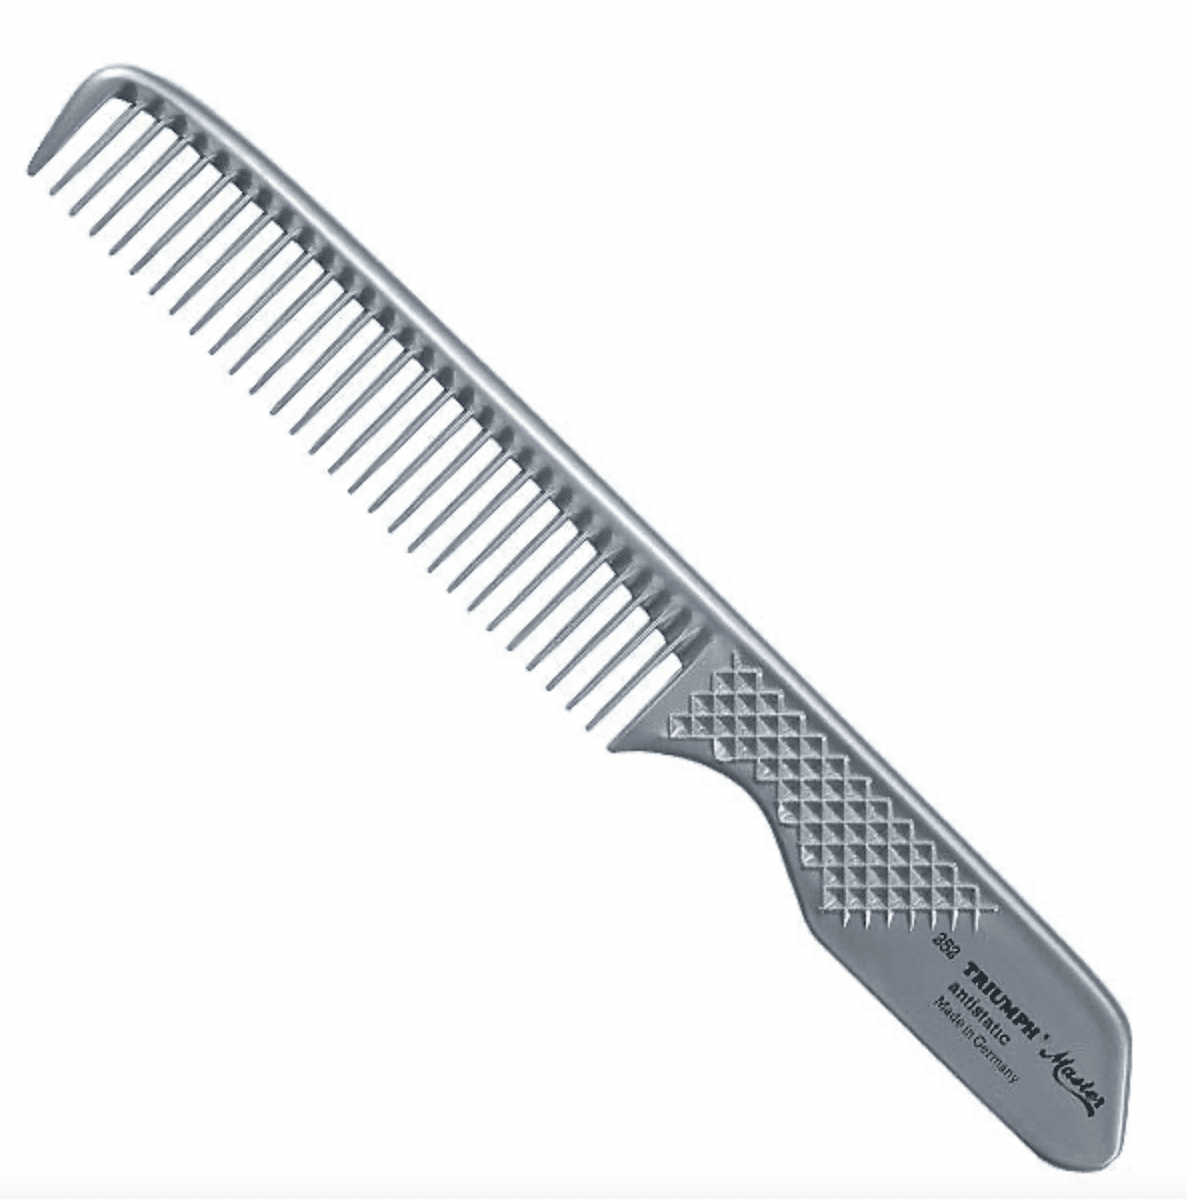 Hercules Sagemann - Triumph master - Cutting comb with handle "252" - Hercules Agemann - Ethni Beauty Market